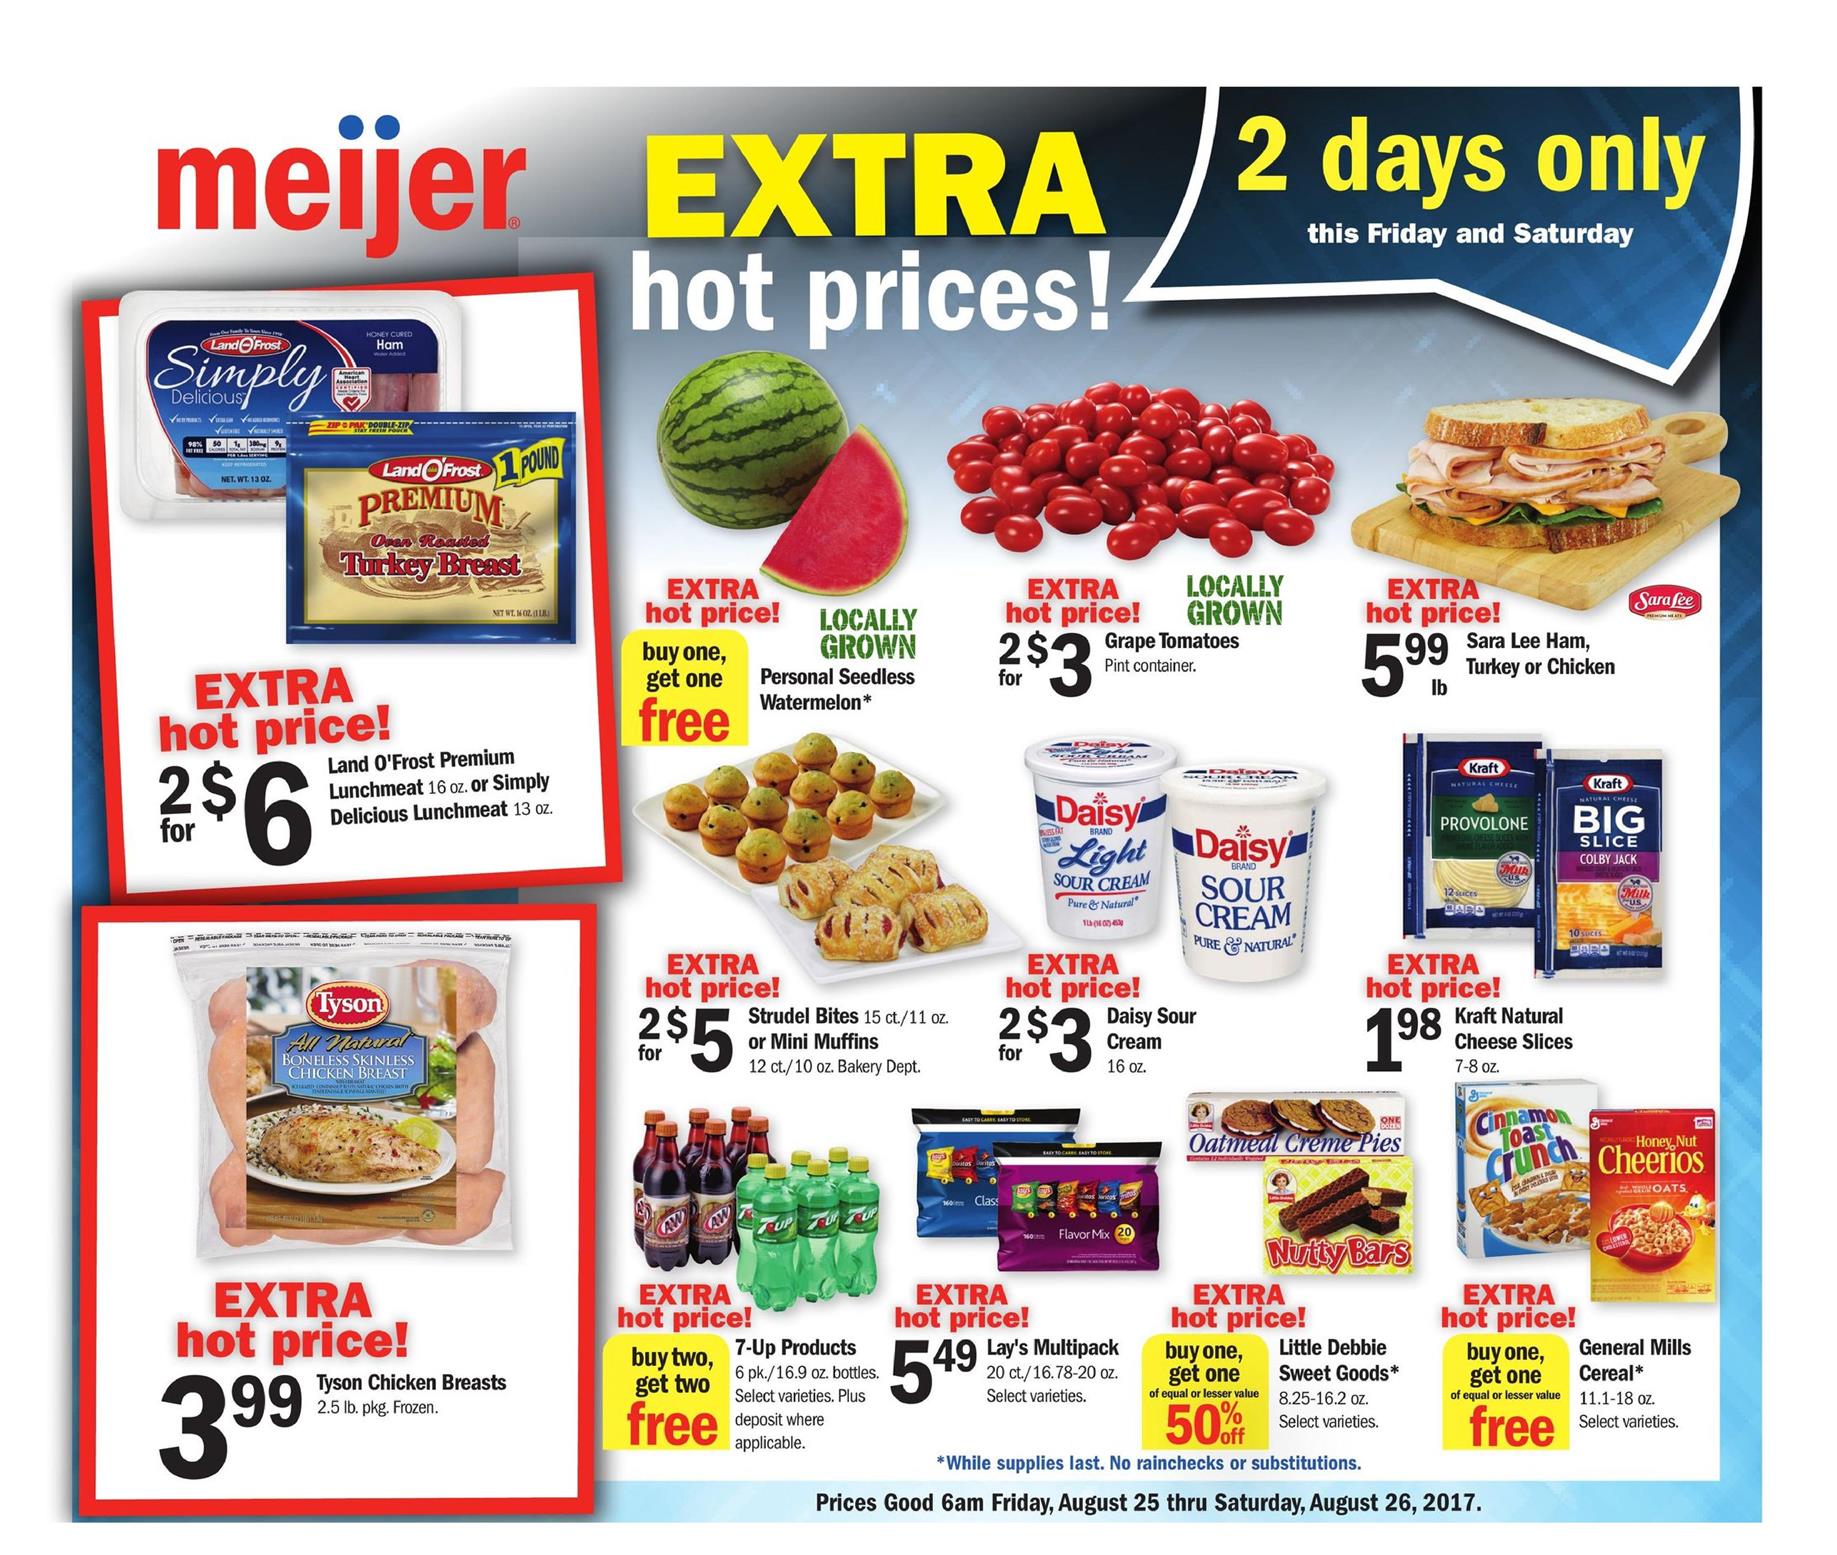 Meijer 2 Day Sale Ad Aug 25 26 2017 WeeklyAds2